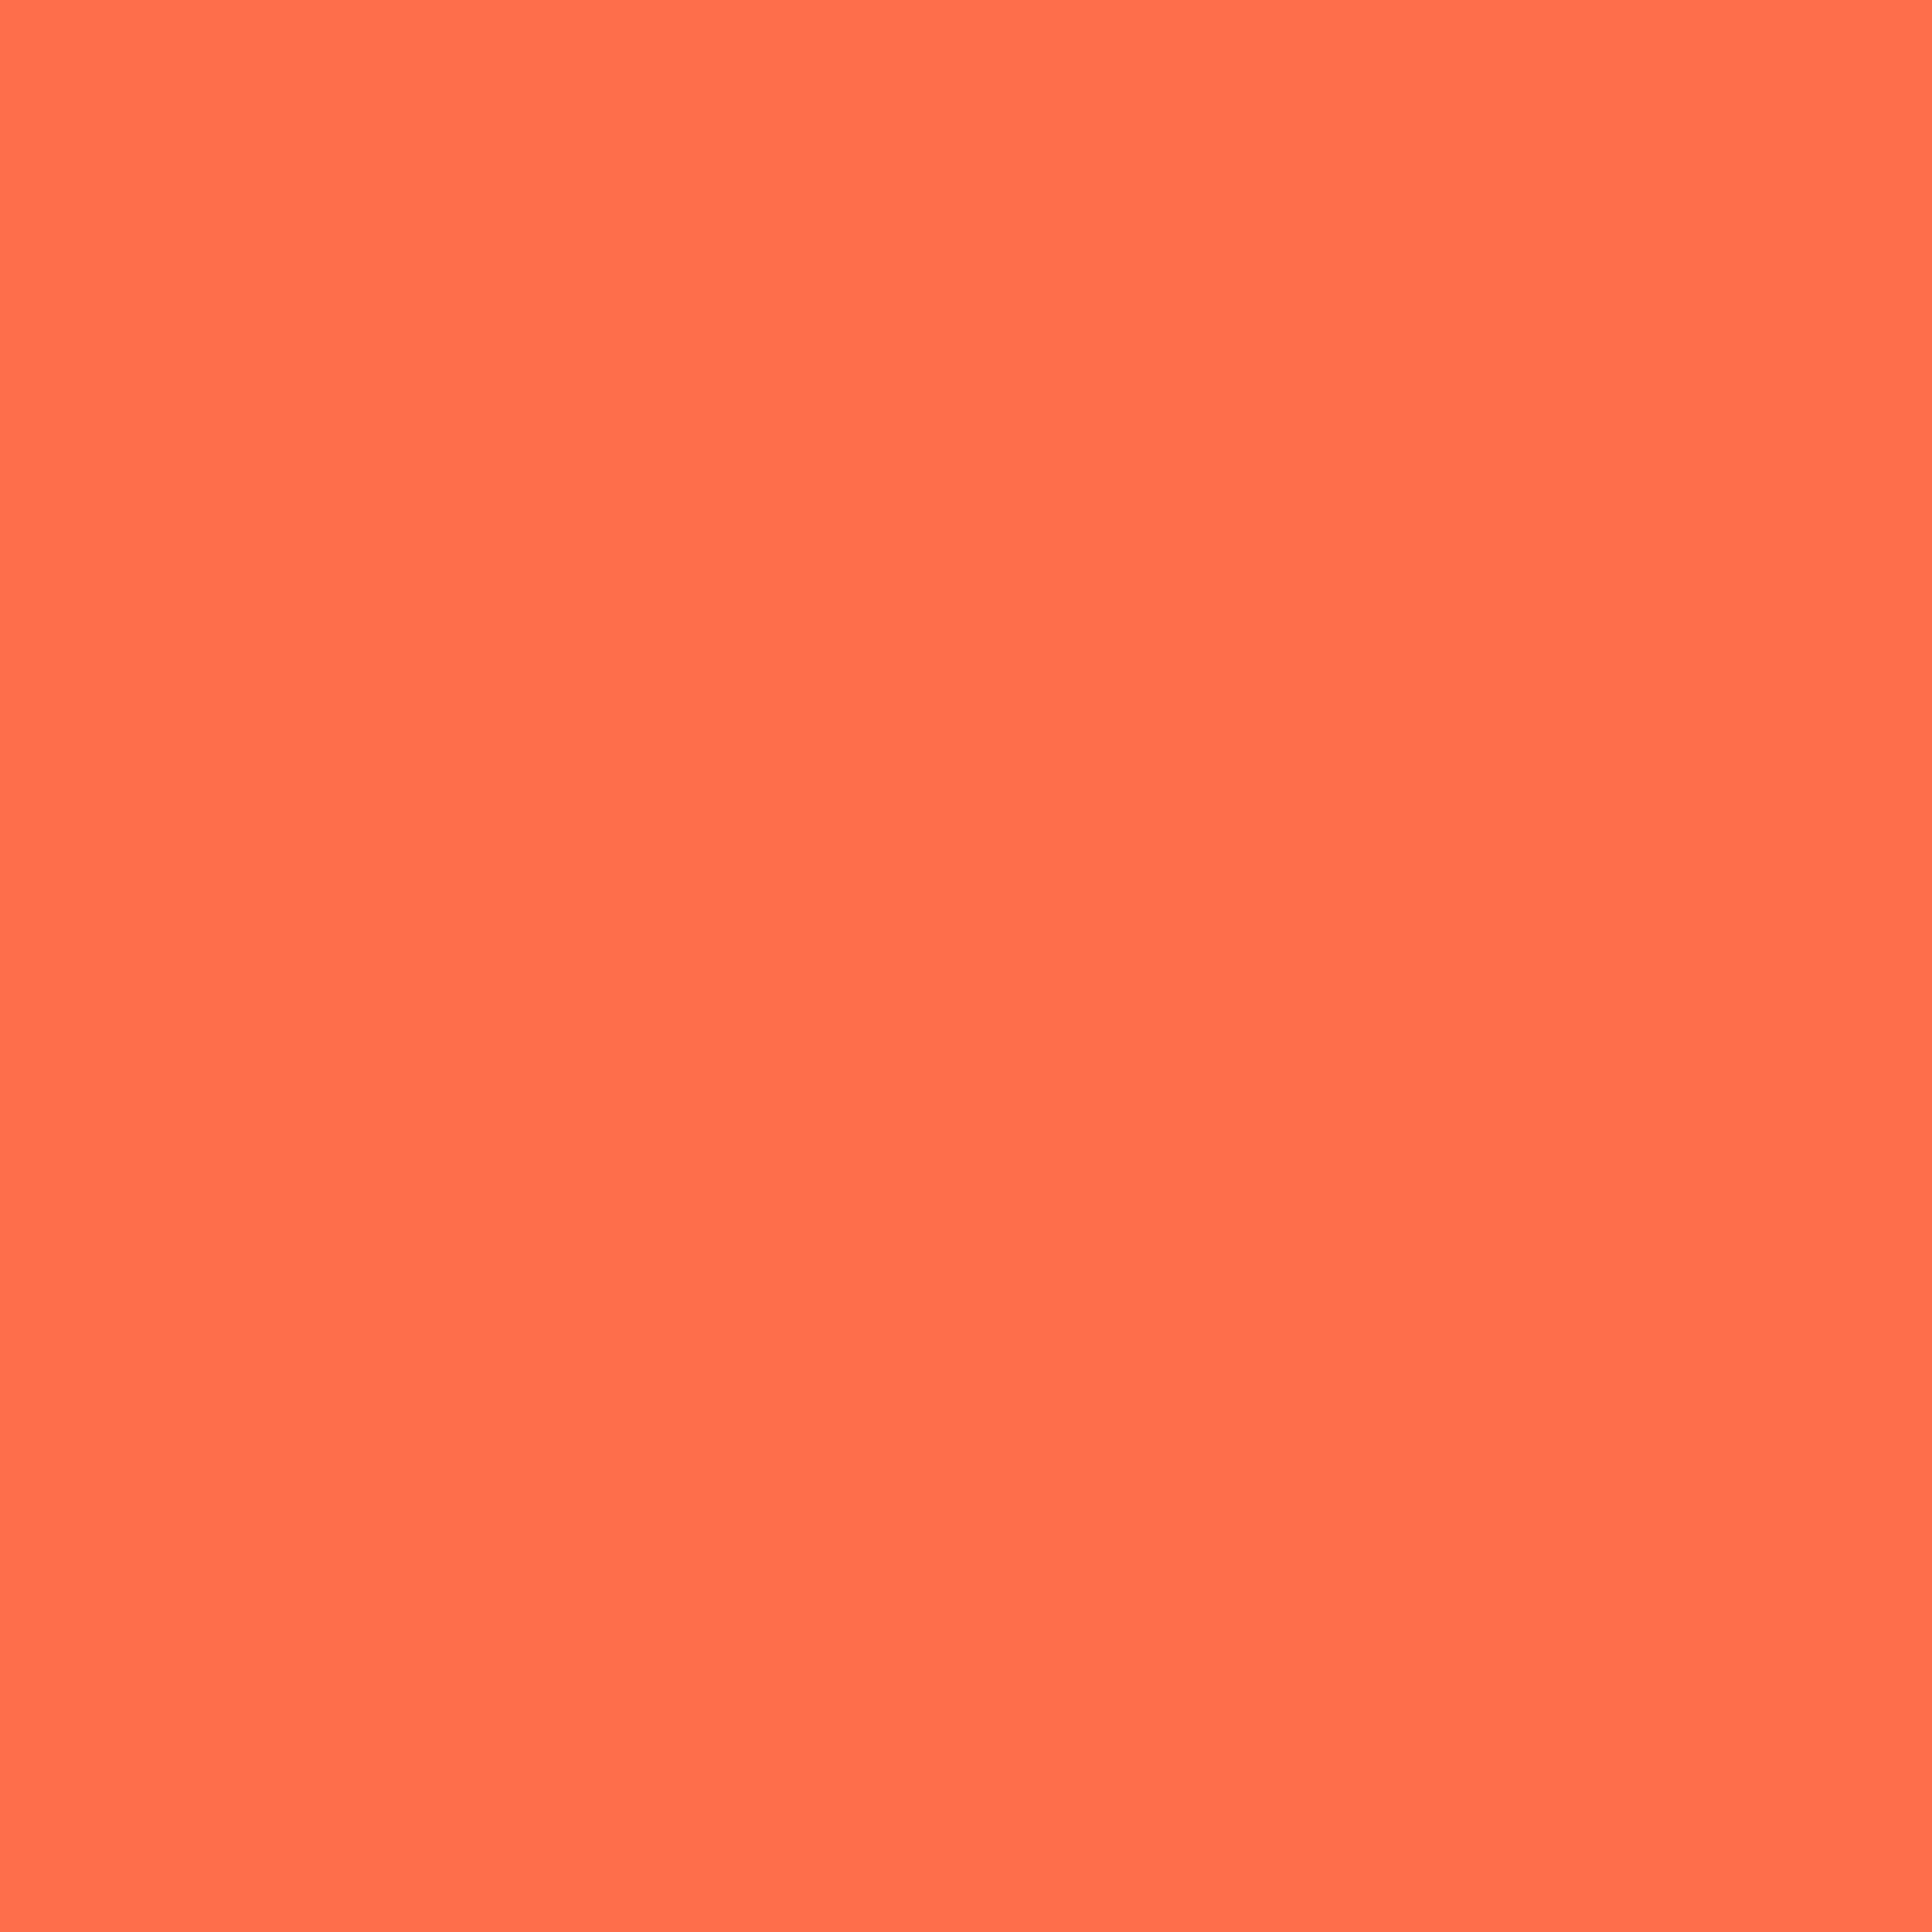 2732x2732 Outrageous Orange Solid Color Background